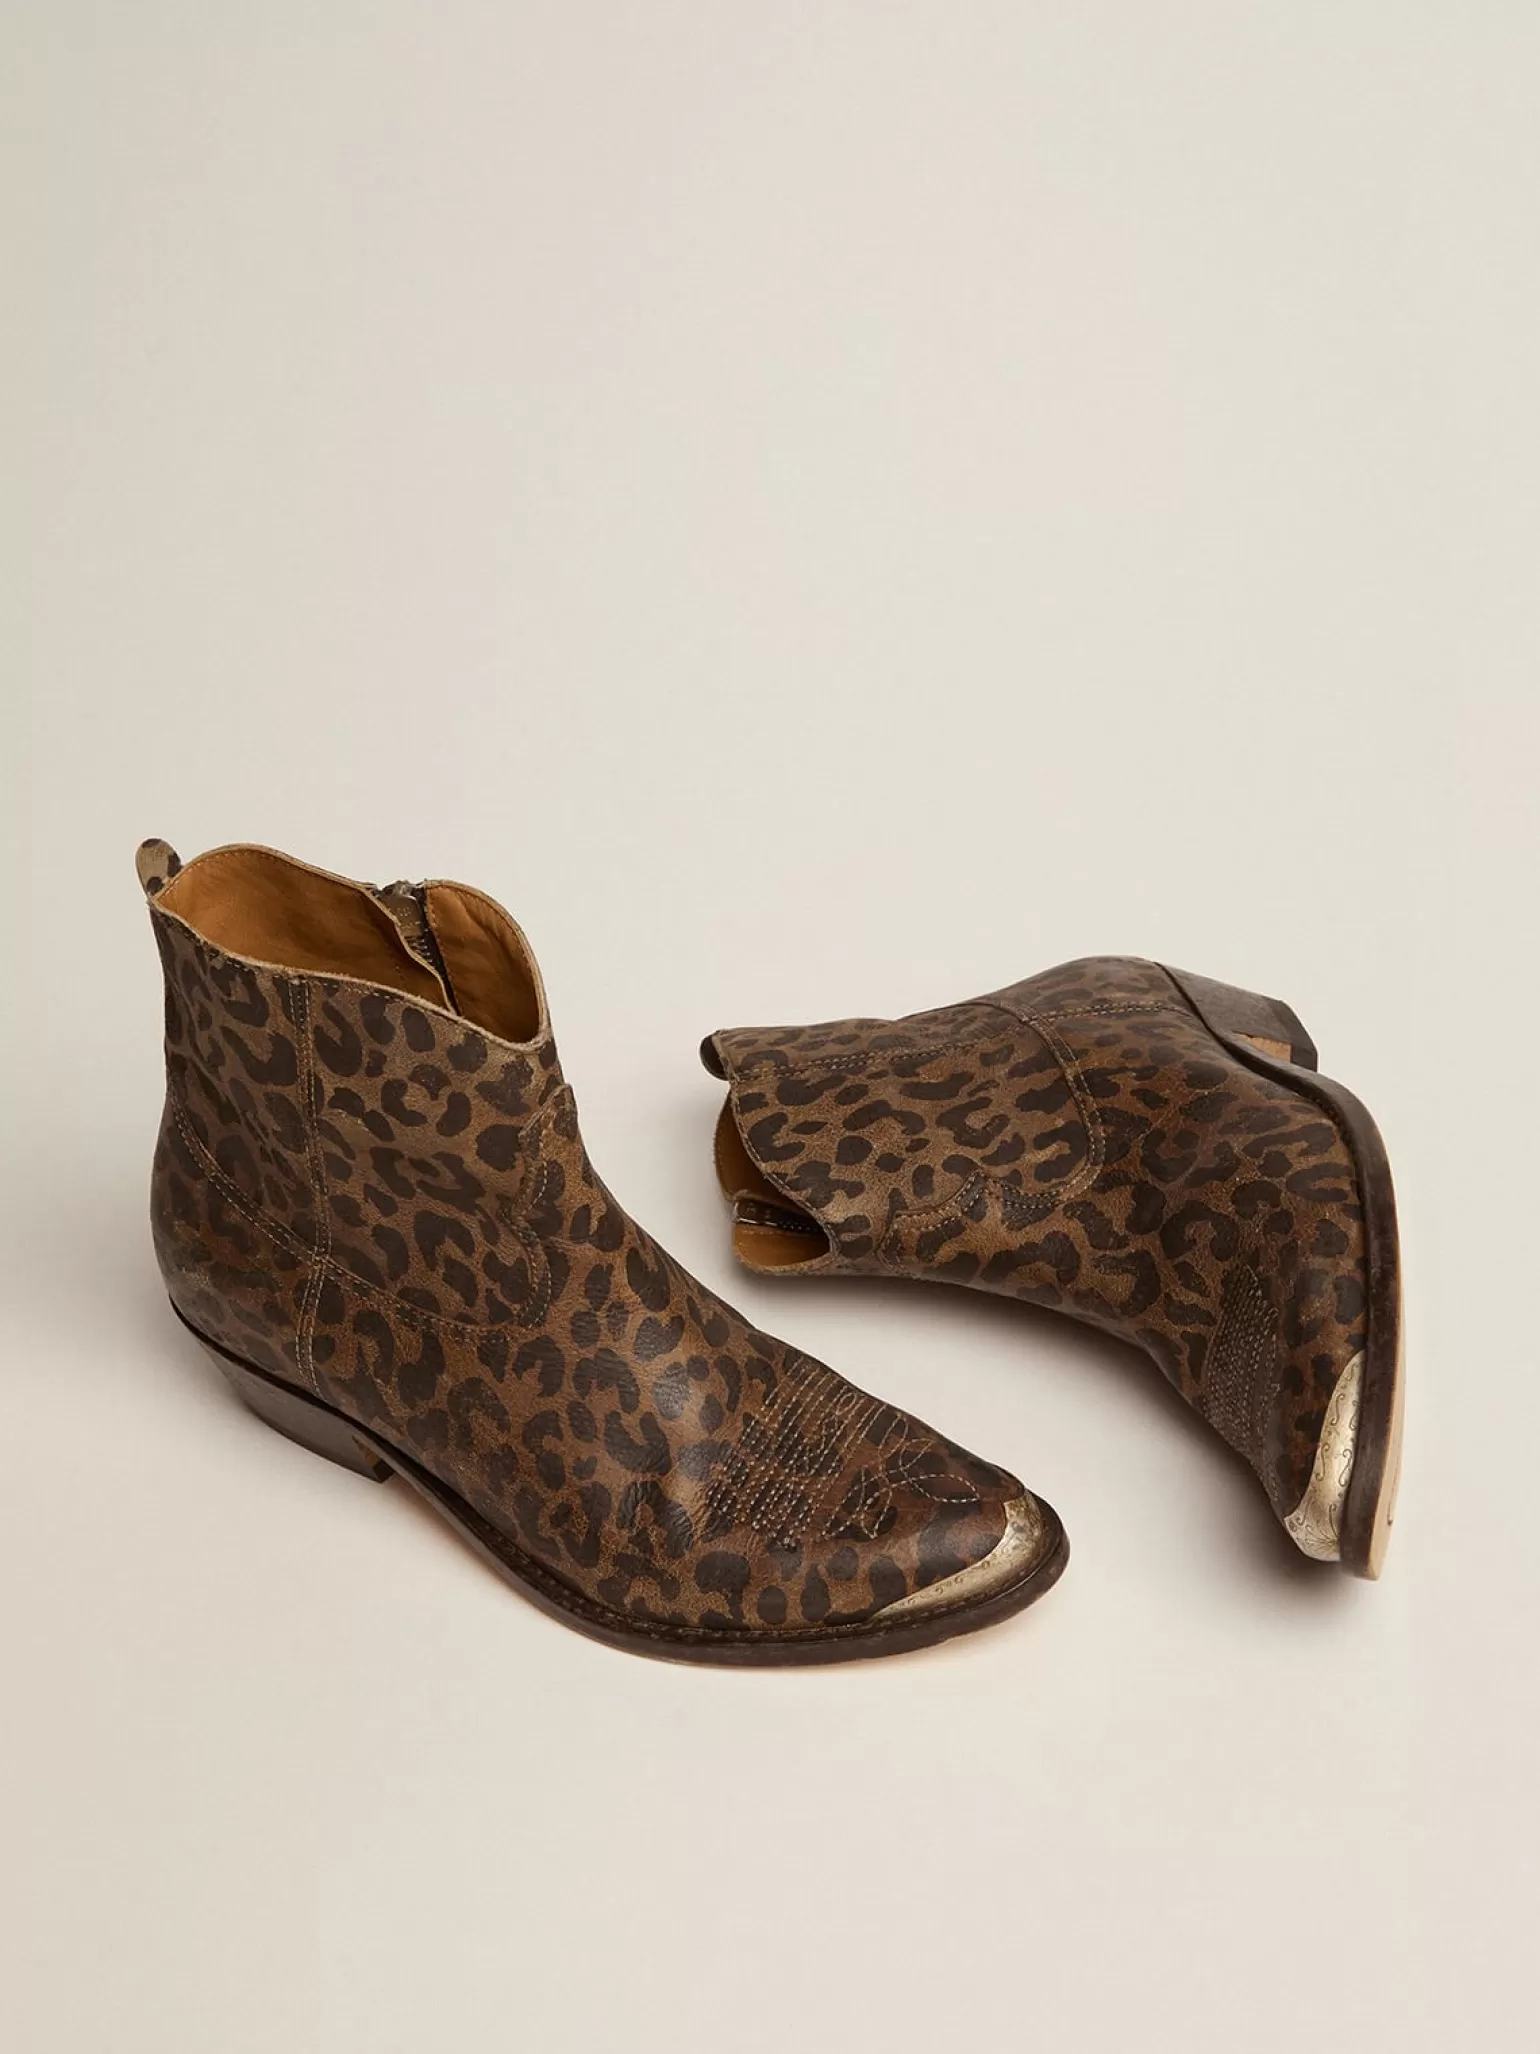 Best Ankle boot feminina de couro com estampa de leopardo MULHER Botas